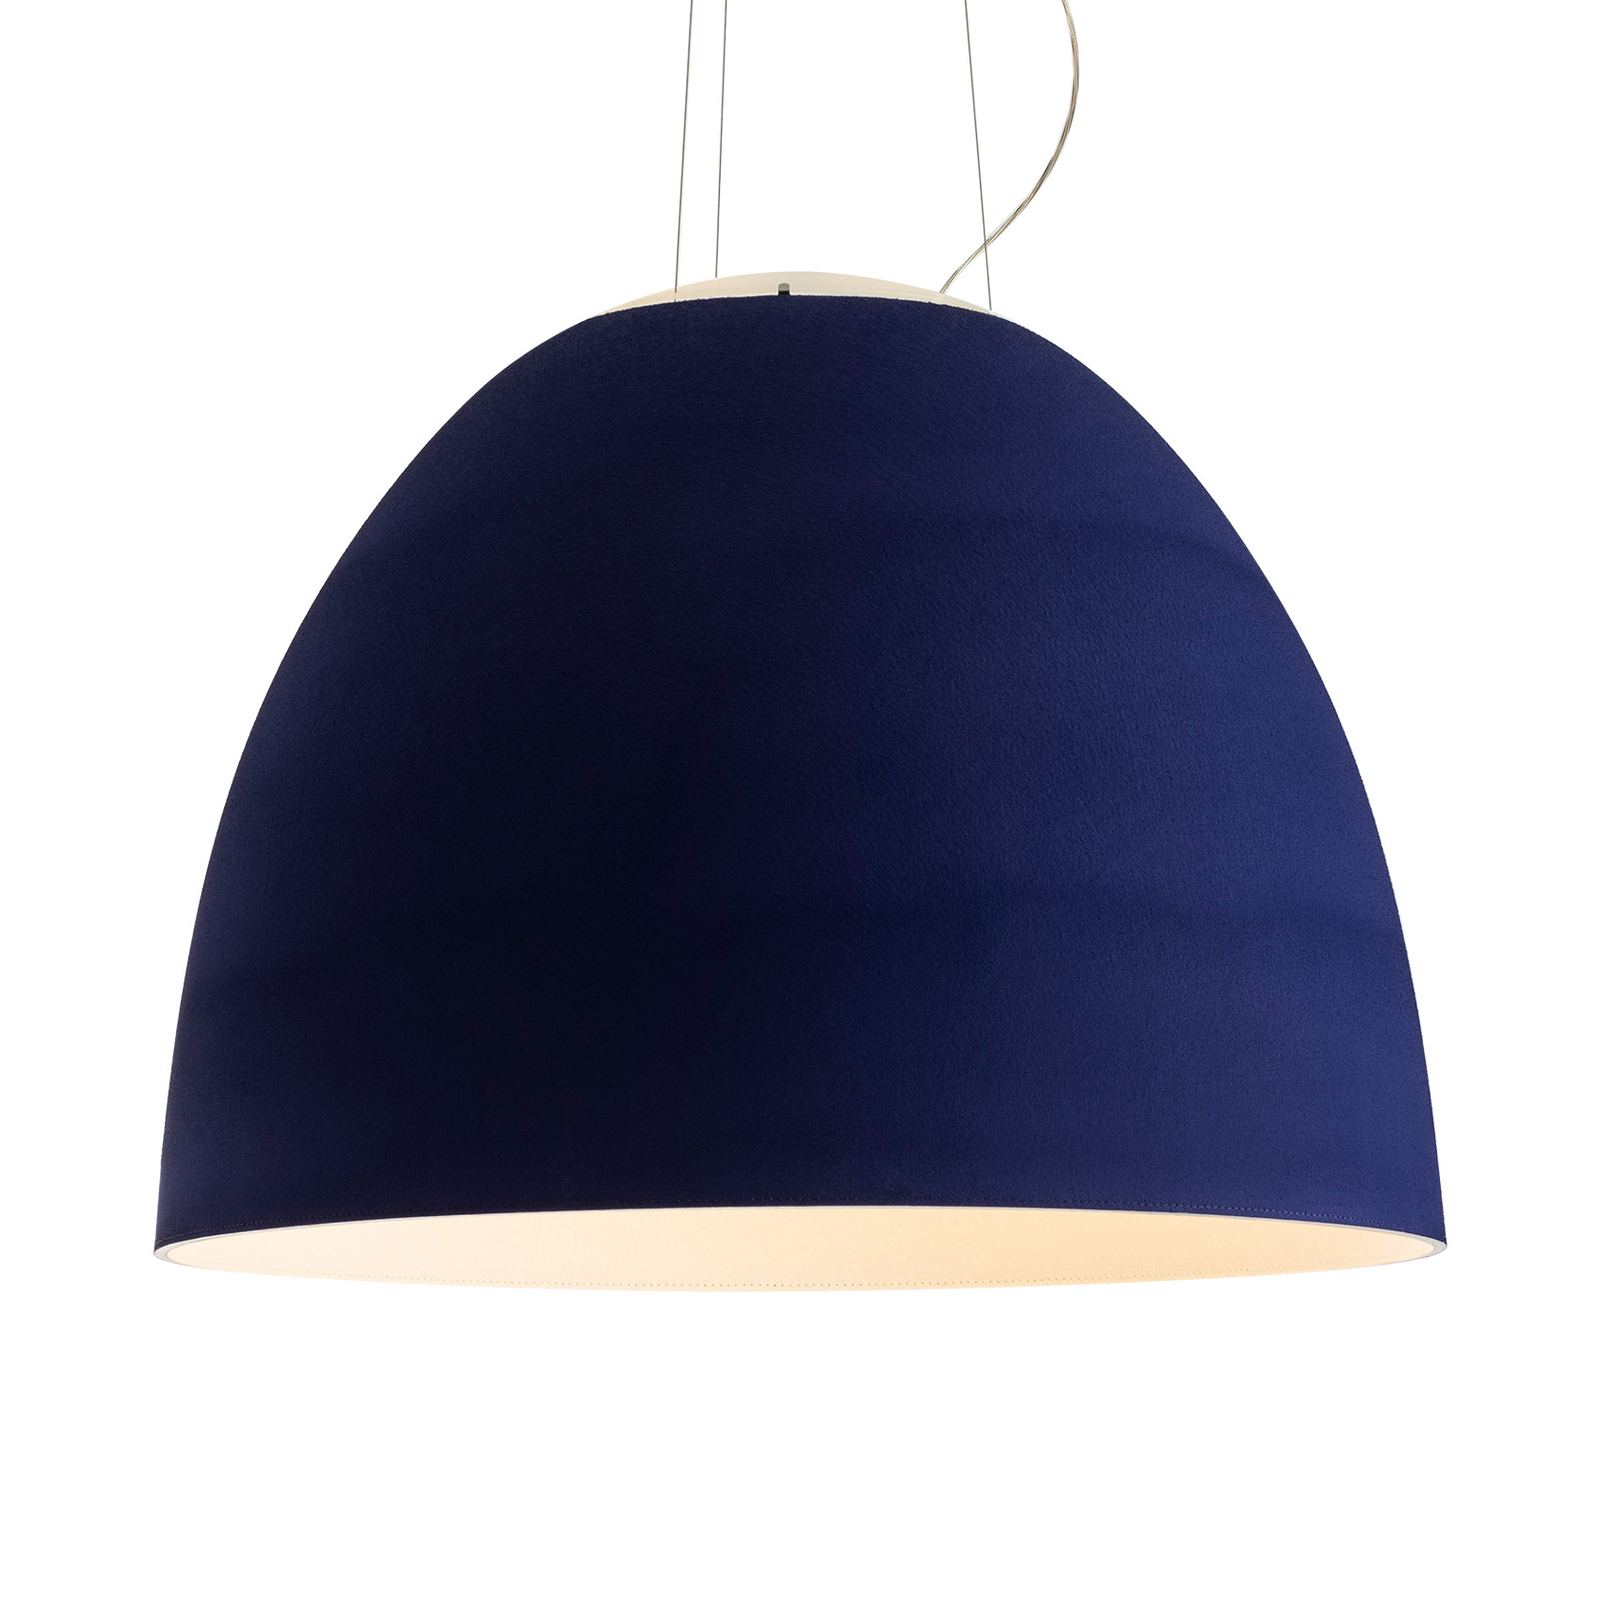 Artemide Nur Acoustic LED hanglamp, blauw